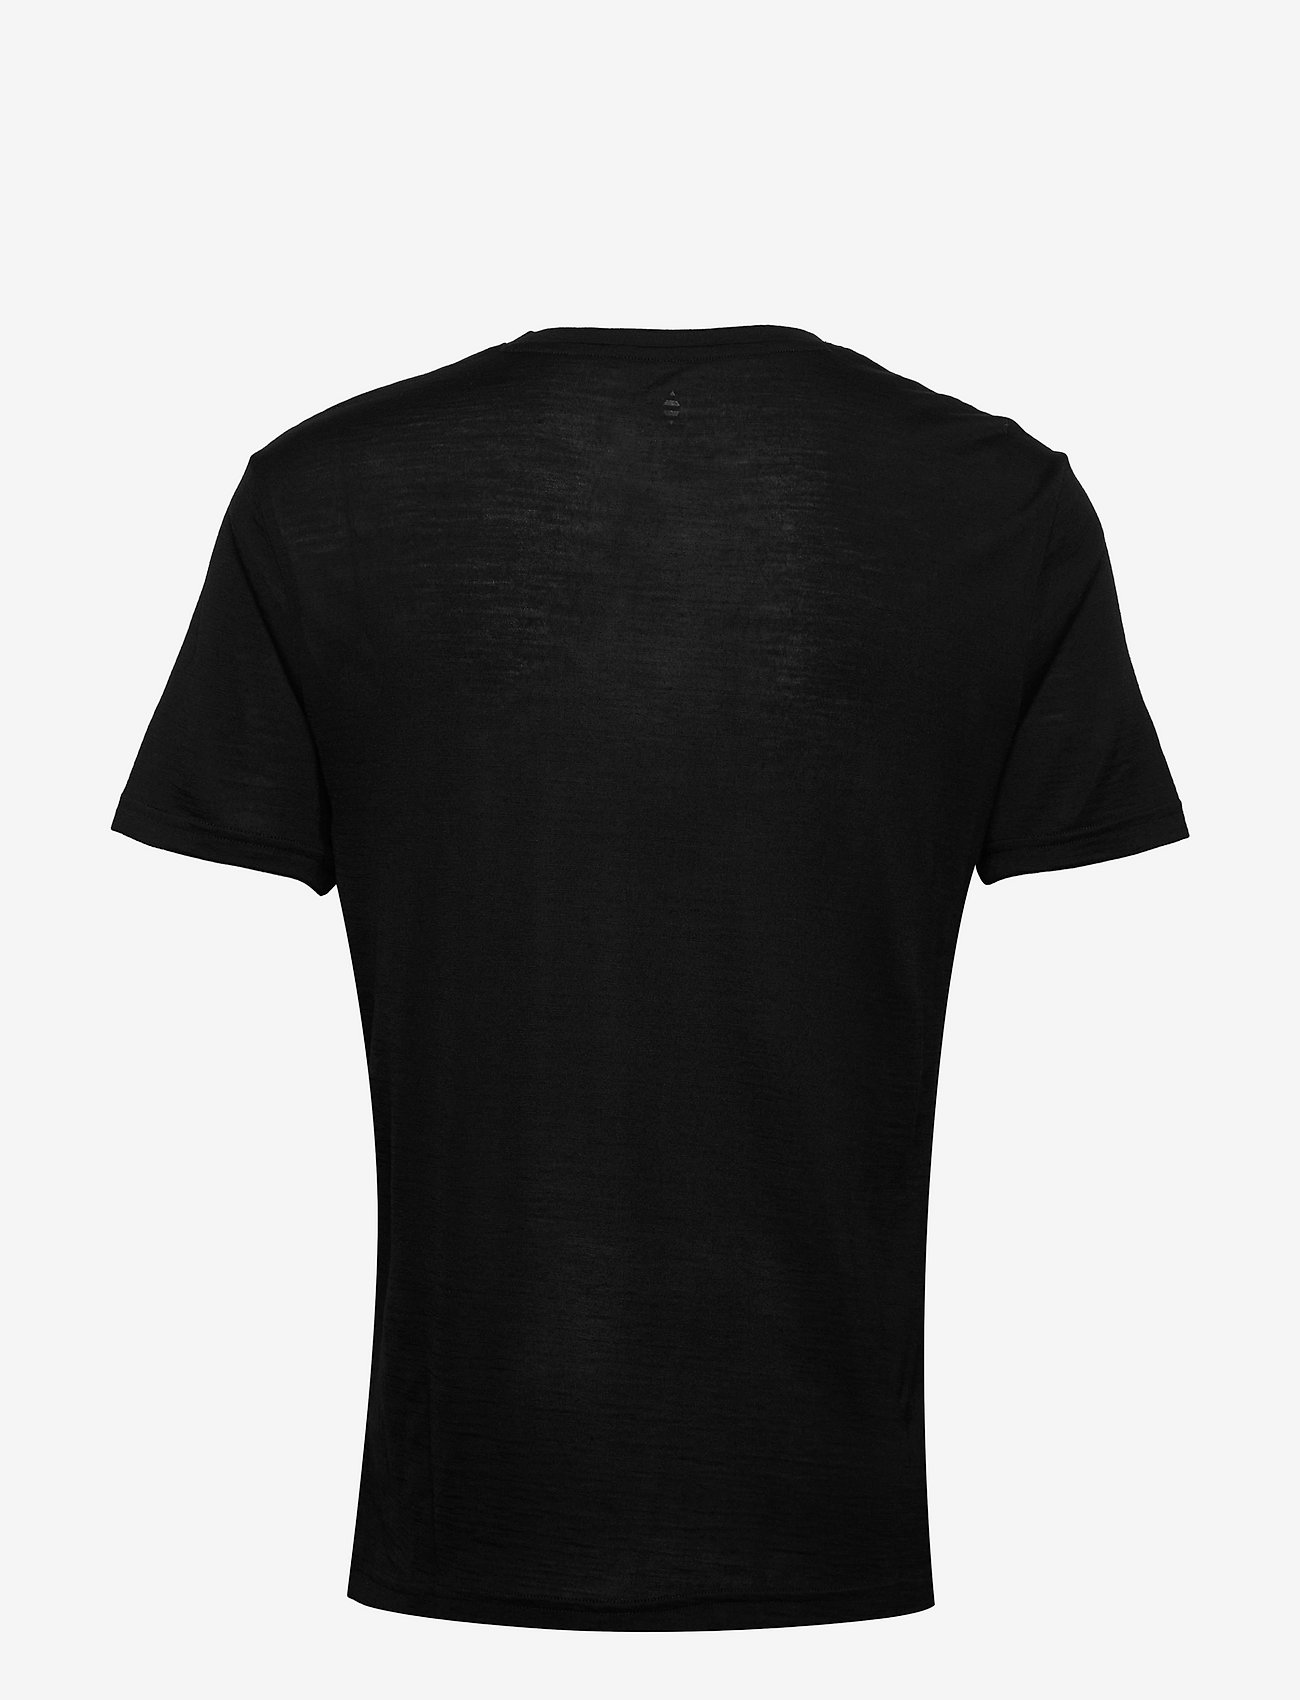 Panos Emporio - PANOS EMPORIO WOOL SHORT SLEEVE TOP - basic t-shirts - black - 1